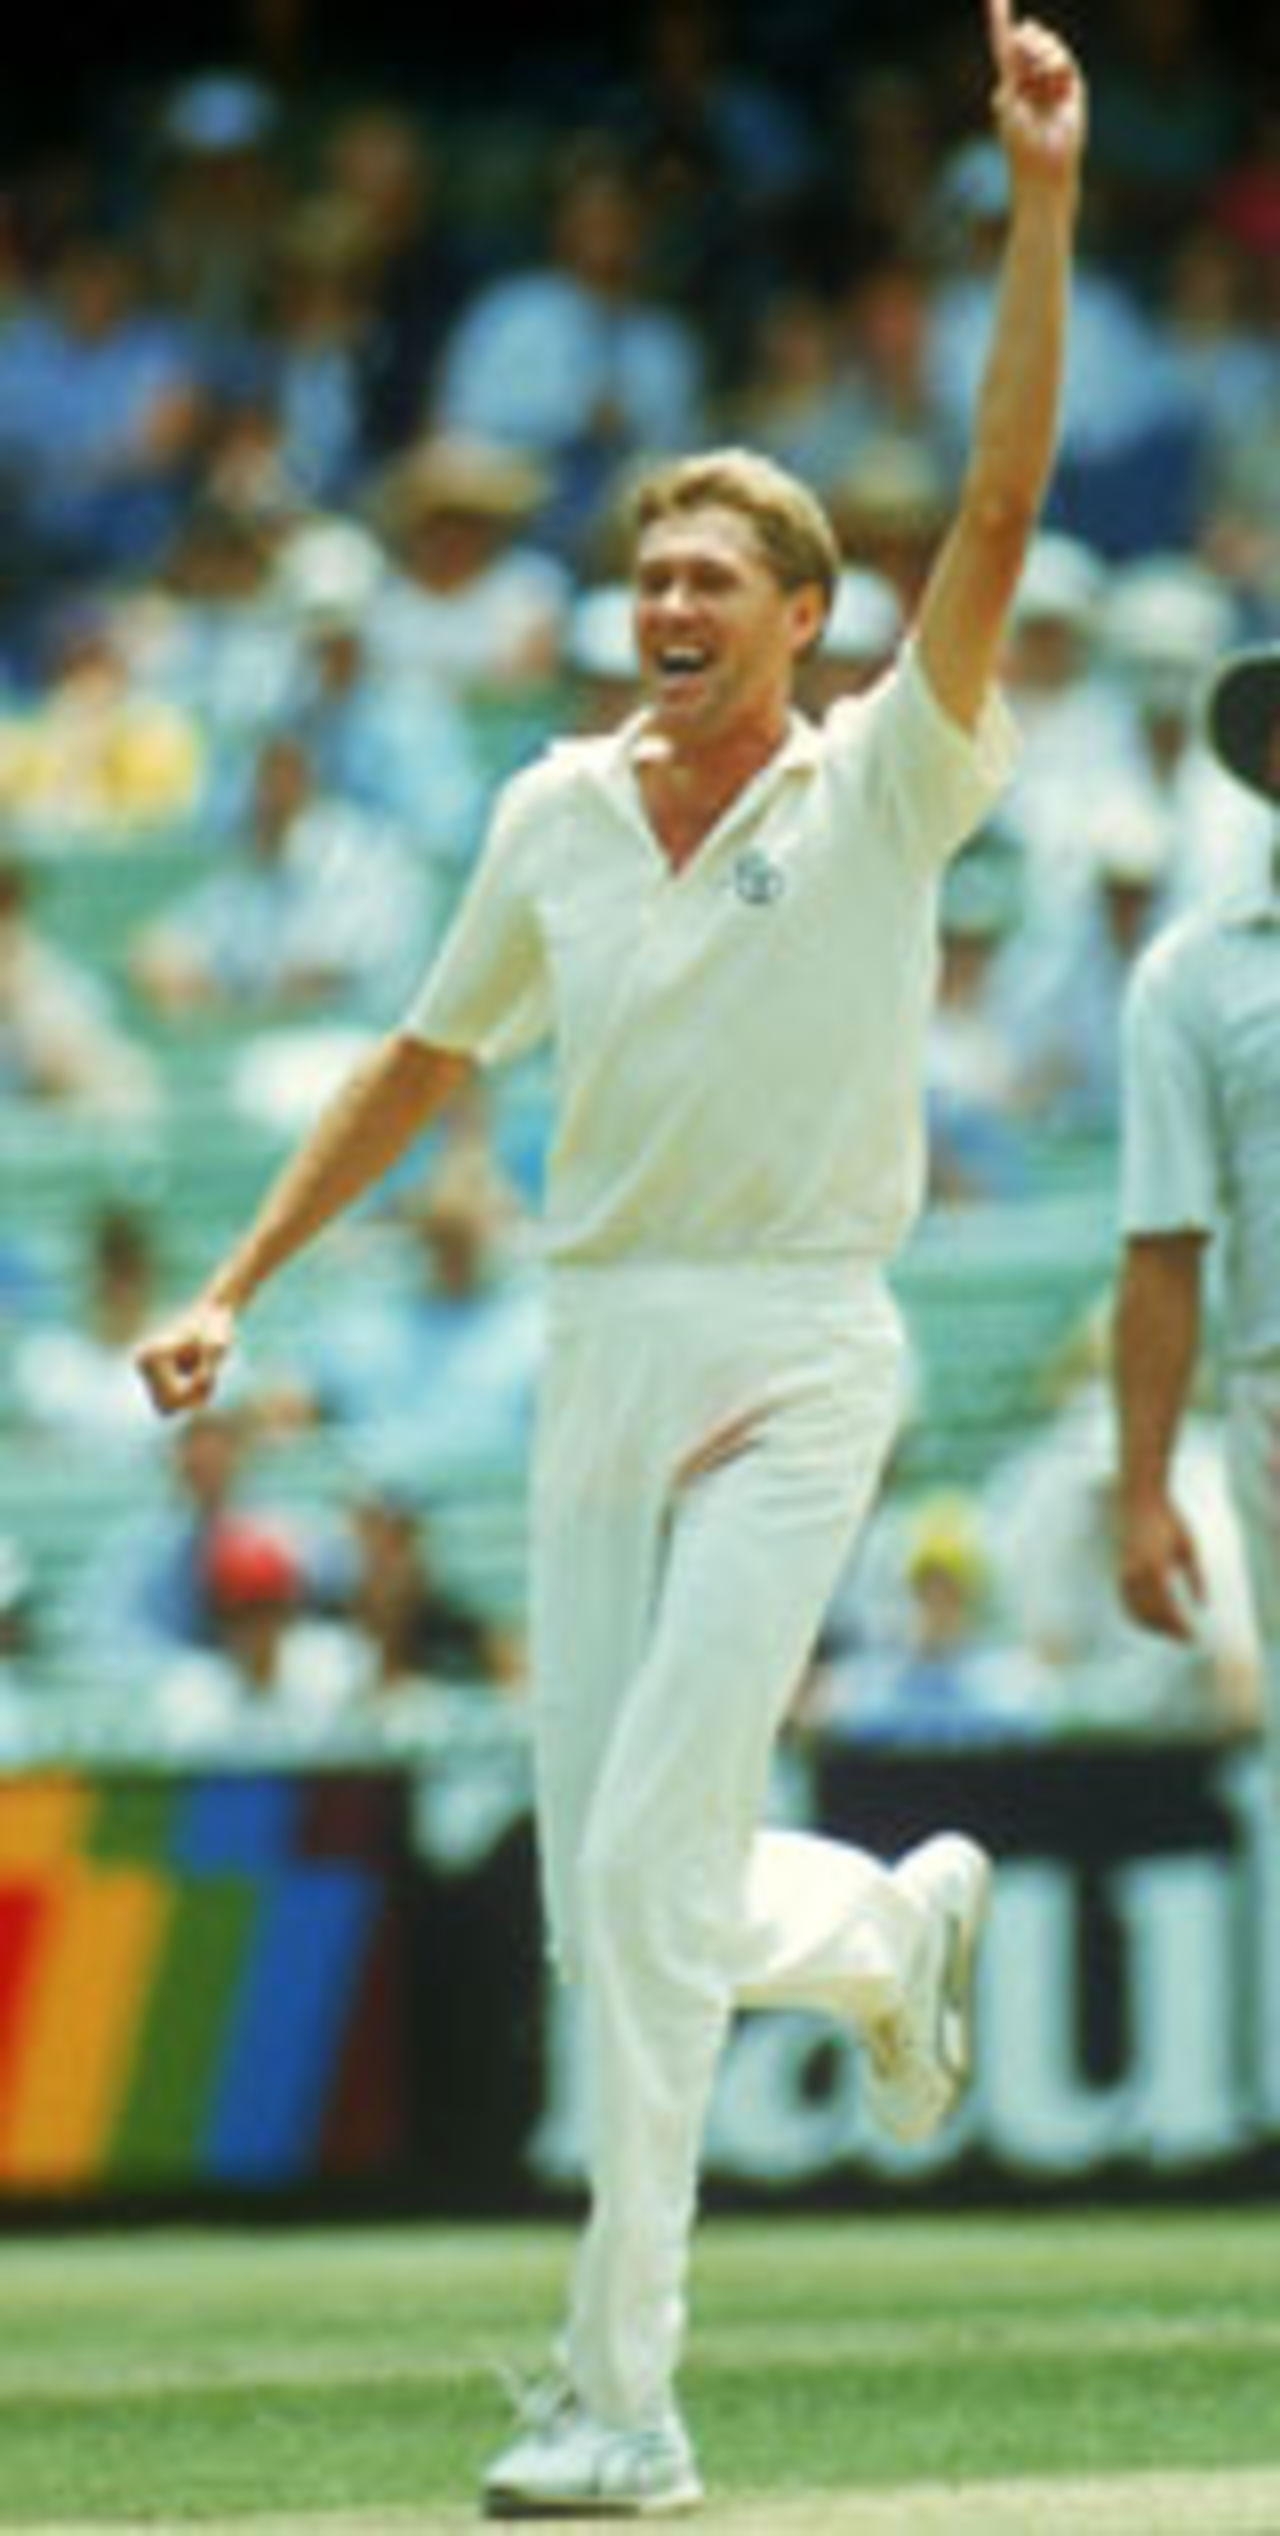 Bruce Reid celebrates a wicket, December 26, 1991